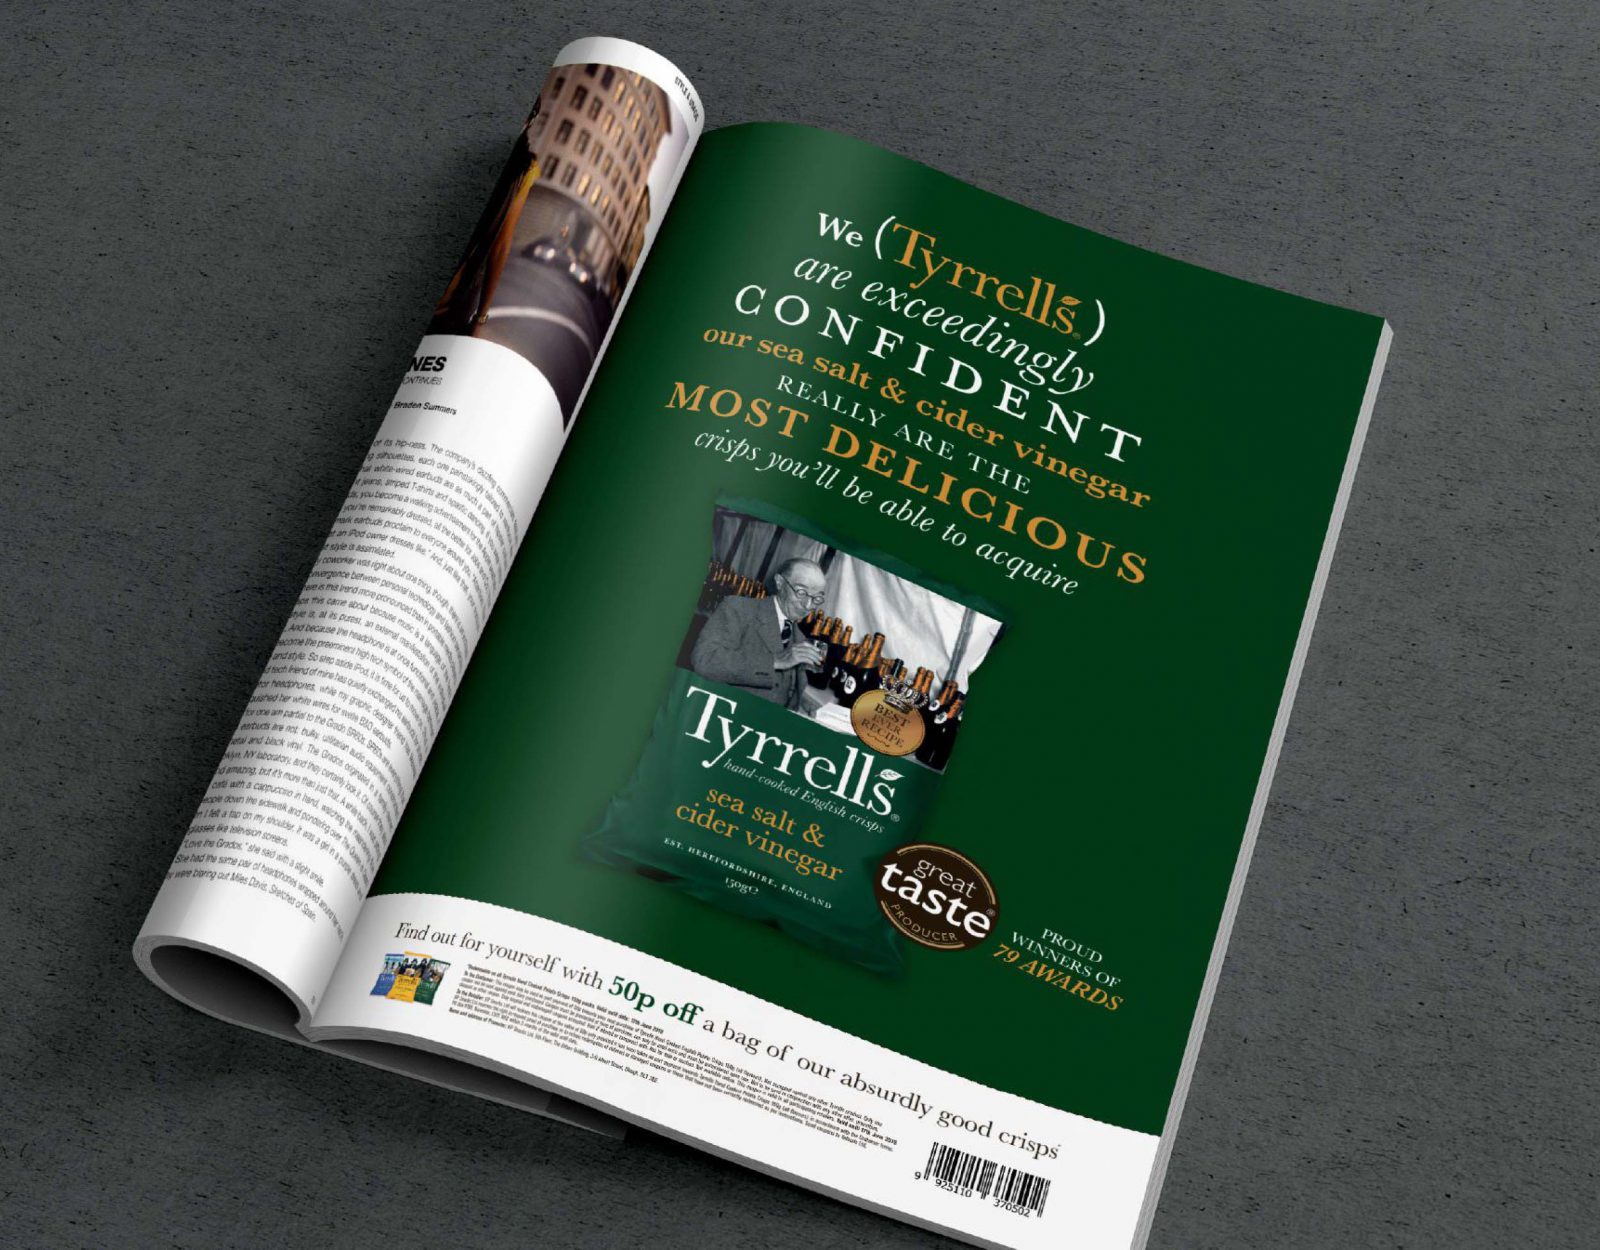 Tyrrells magazine advert